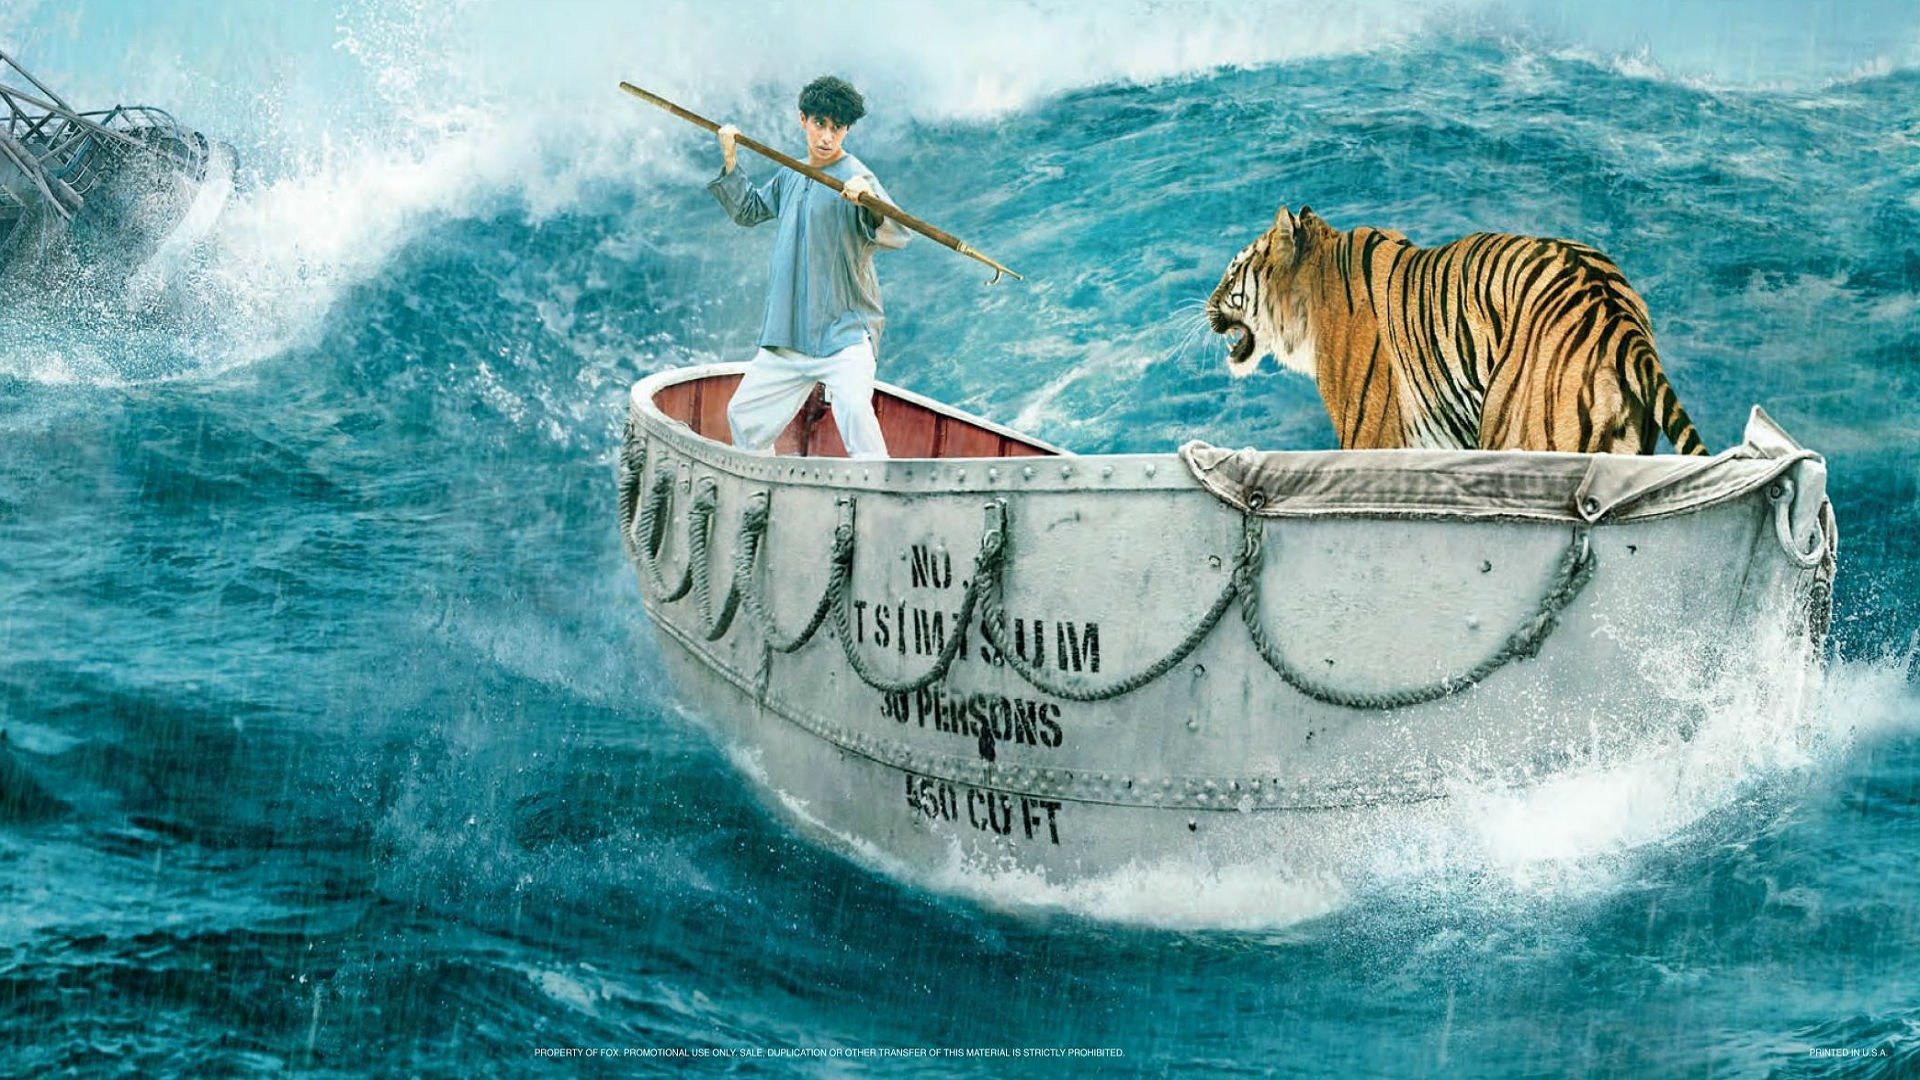 1920x1080 LIFE Of Pi family adventure drama fantasy tiger 3-d animation 1lifepi  friend shipwreck predator tiger ocean sea voyage ship boat wallpaper |   ...